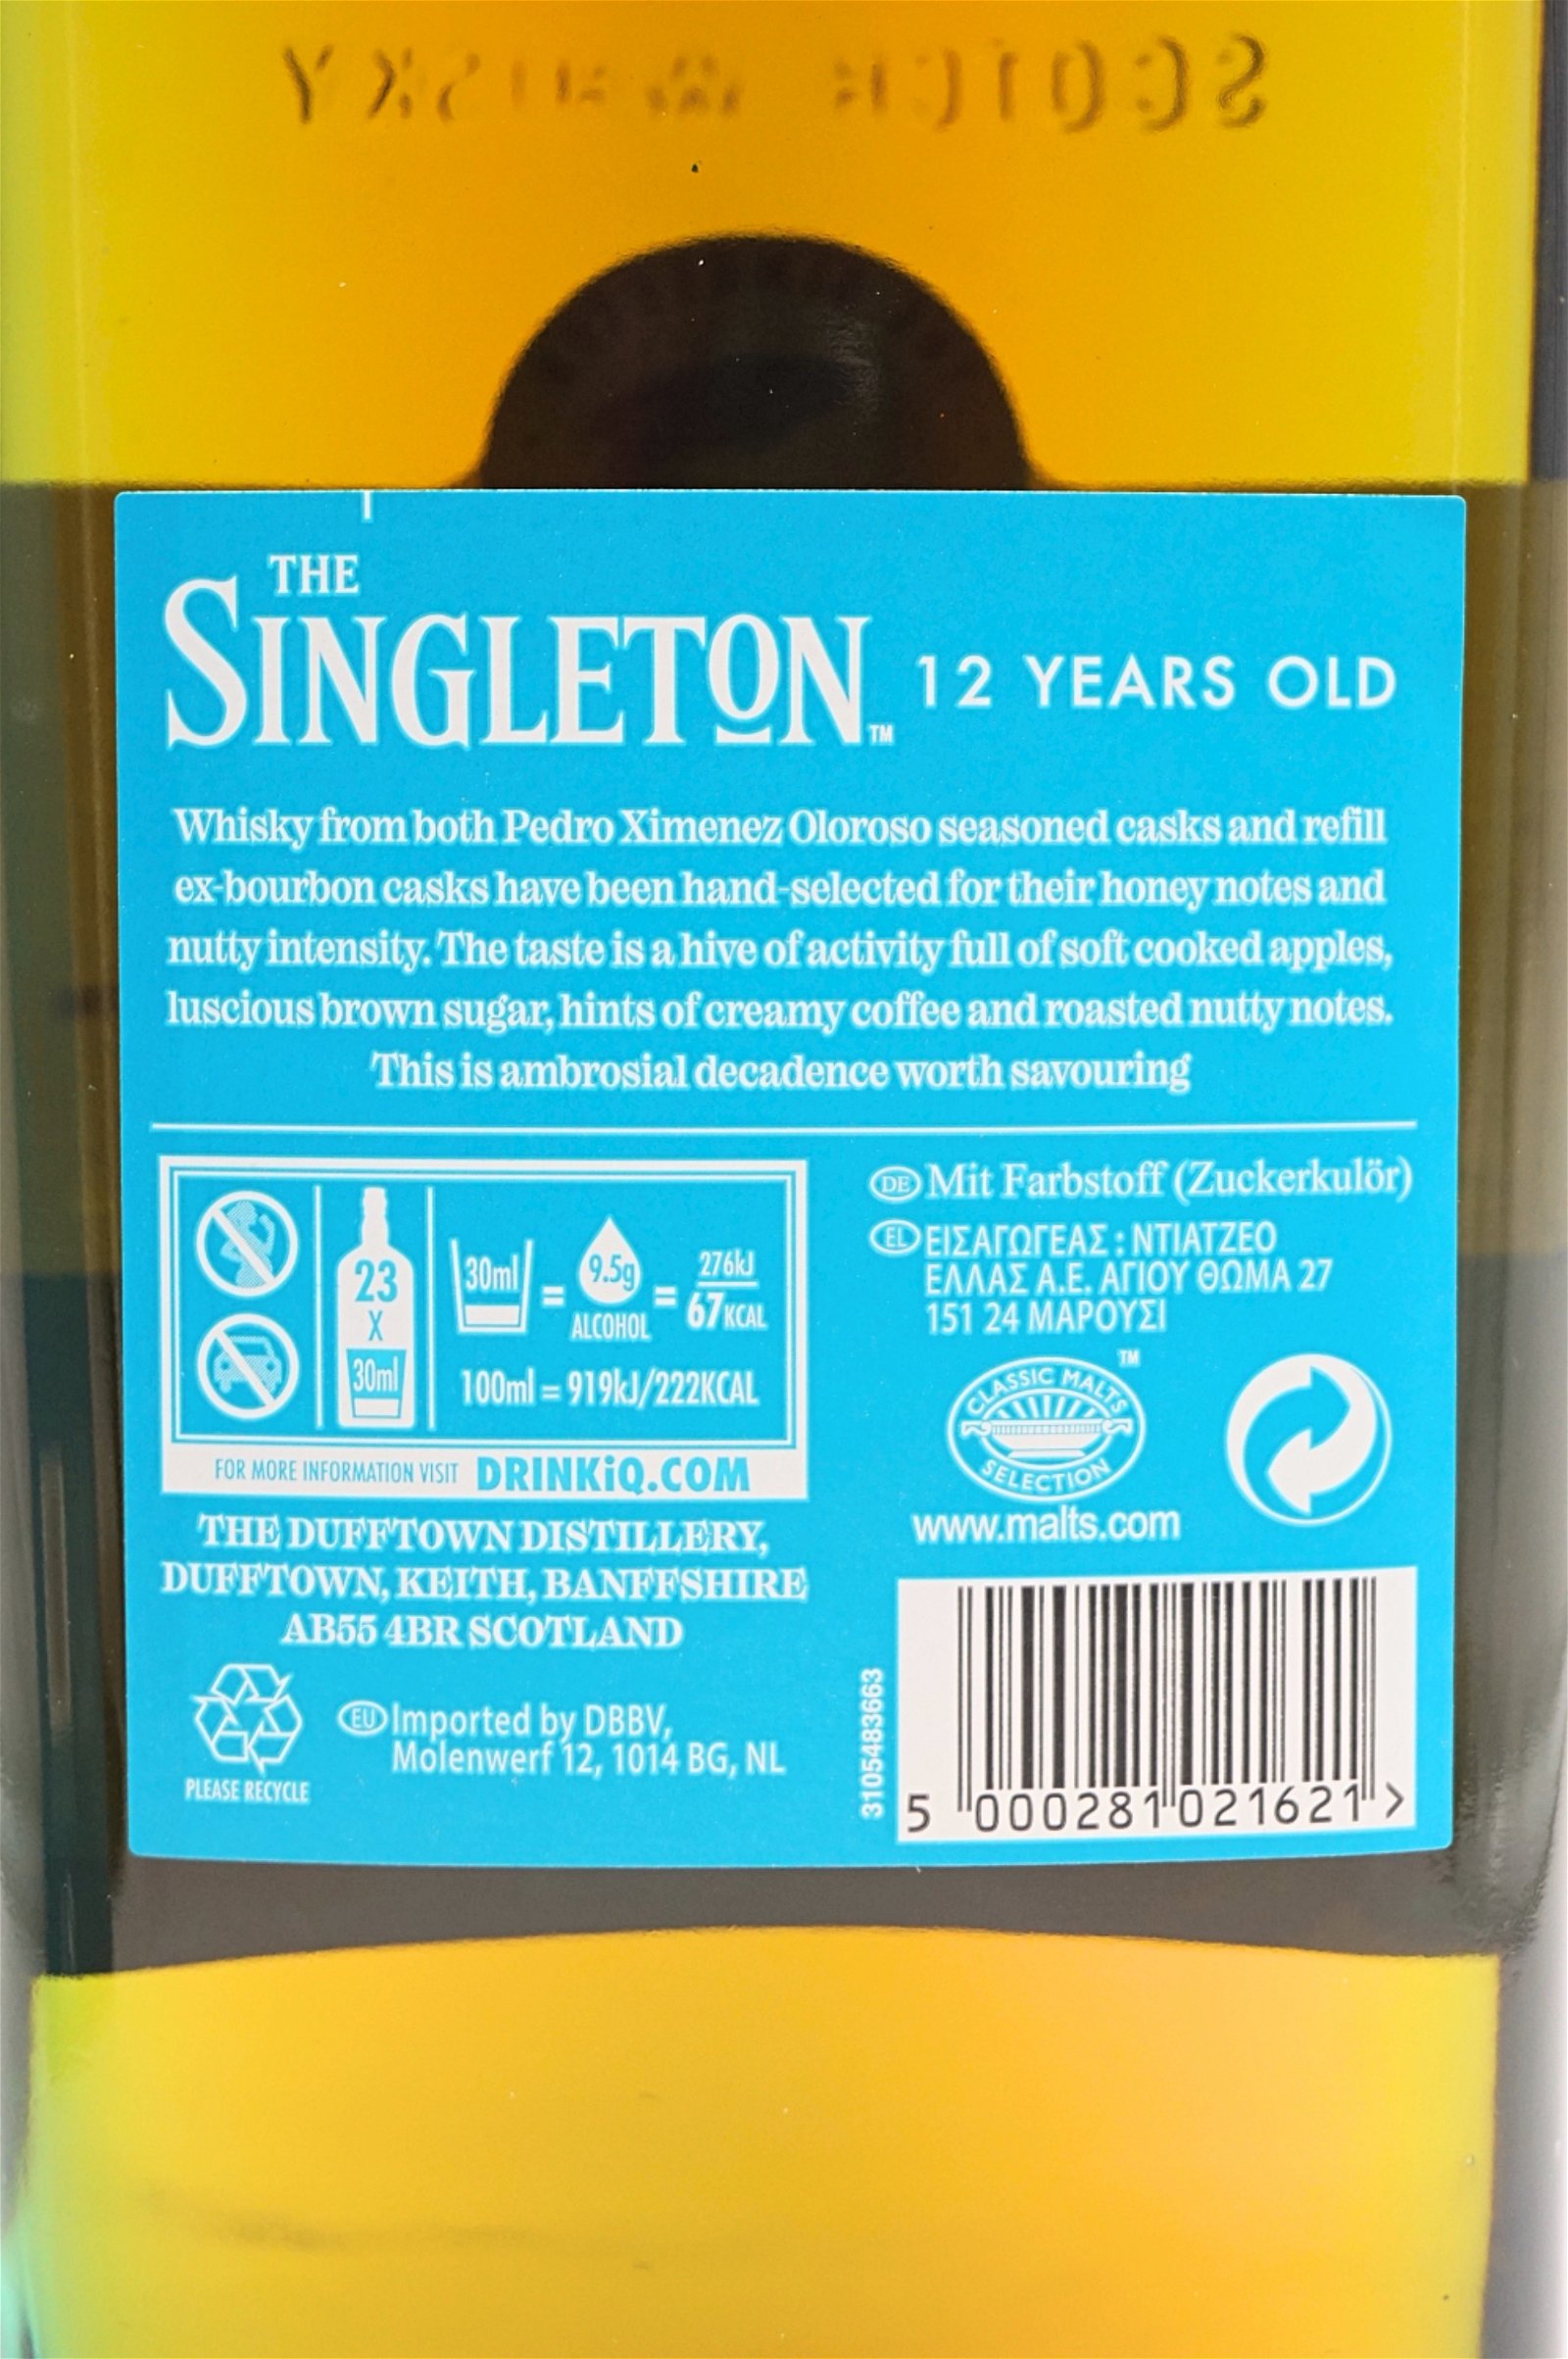 The Singleton of Dufftown 12 Jahre Luscious Nectar Single Malt Scotch Whisky